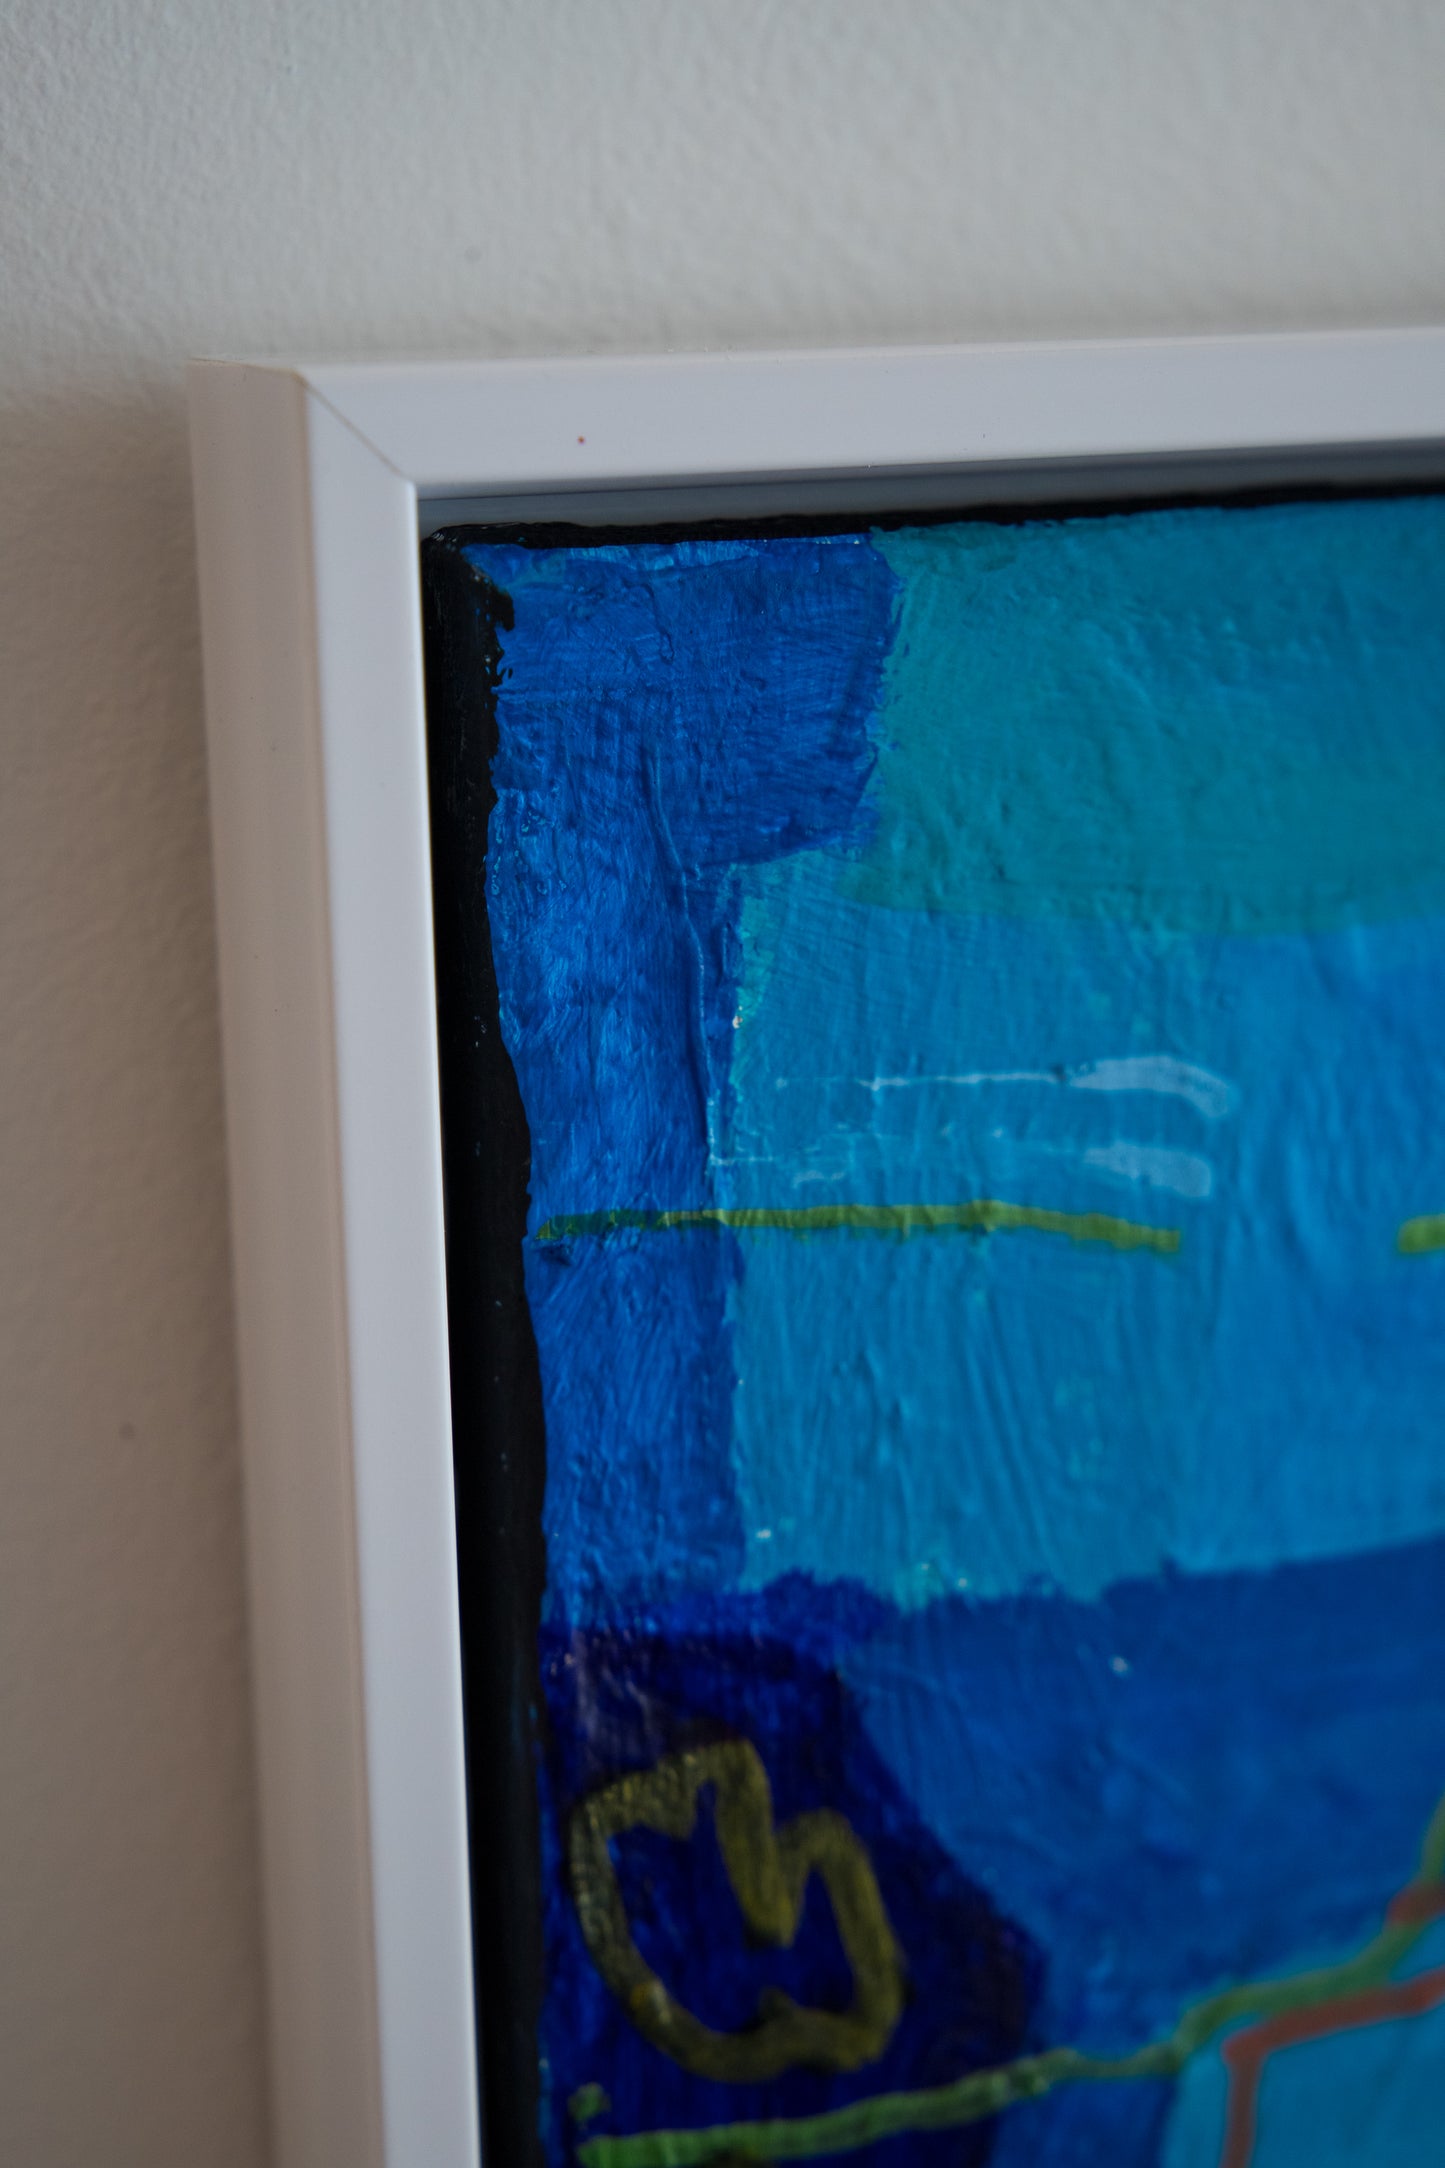 Hang Ten (Abstract Wave) (Framed)